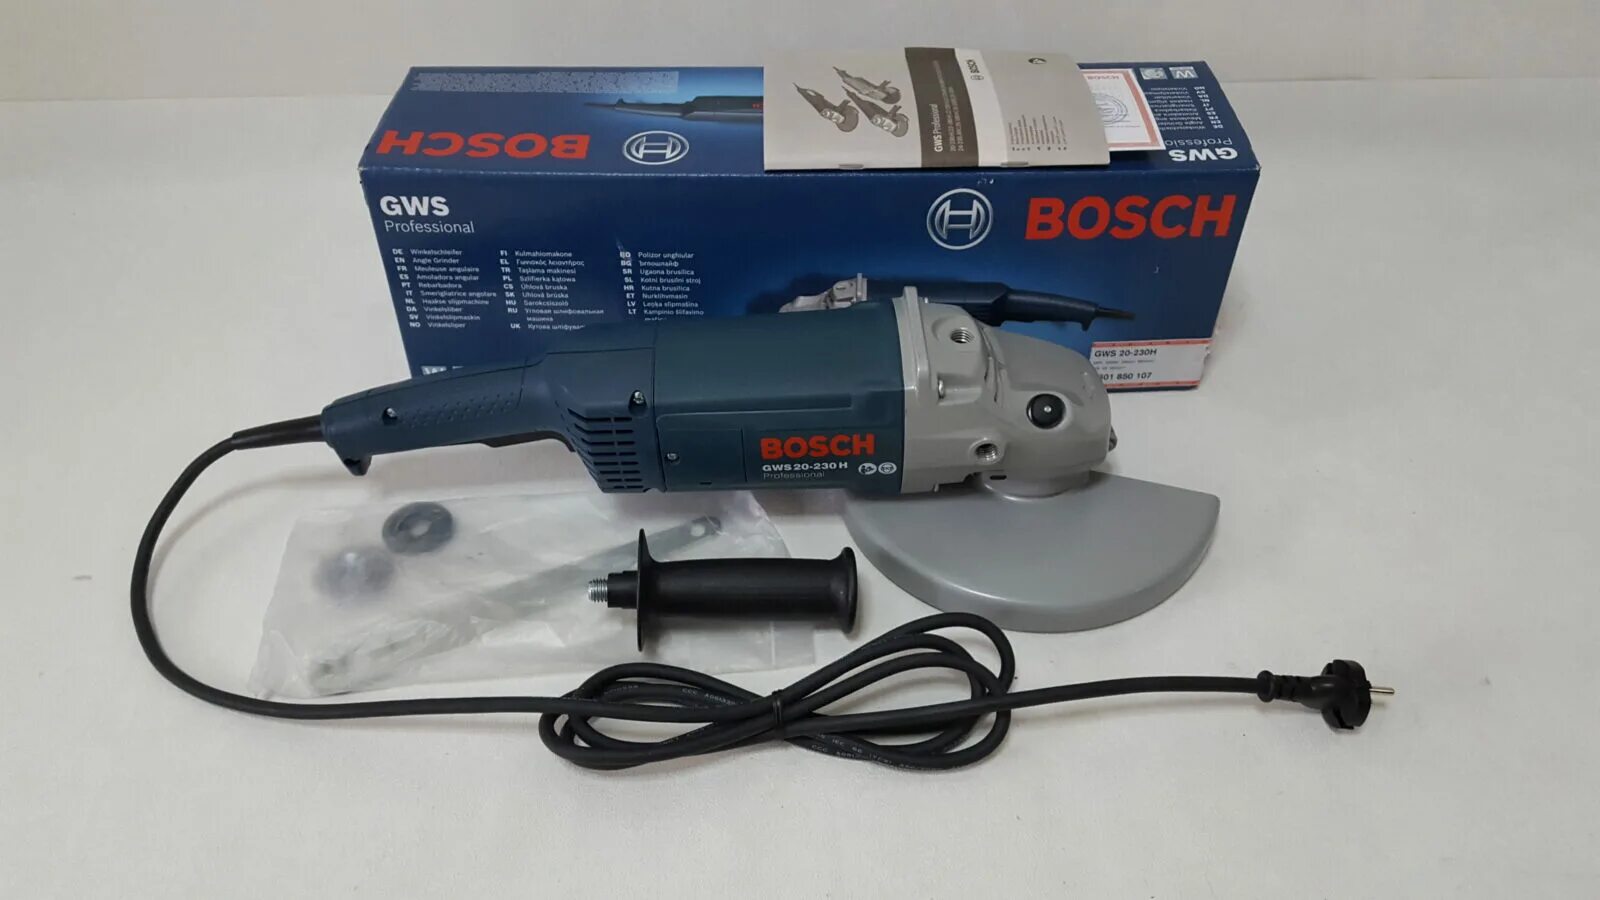 Купить bosch 230. Болгарка бош 20-230. УШМ Bosch GWS 20-230н. УШМ Bosch GWS 20-230 H, 2000 Вт, 230 мм. Болгарка Bosch 230.